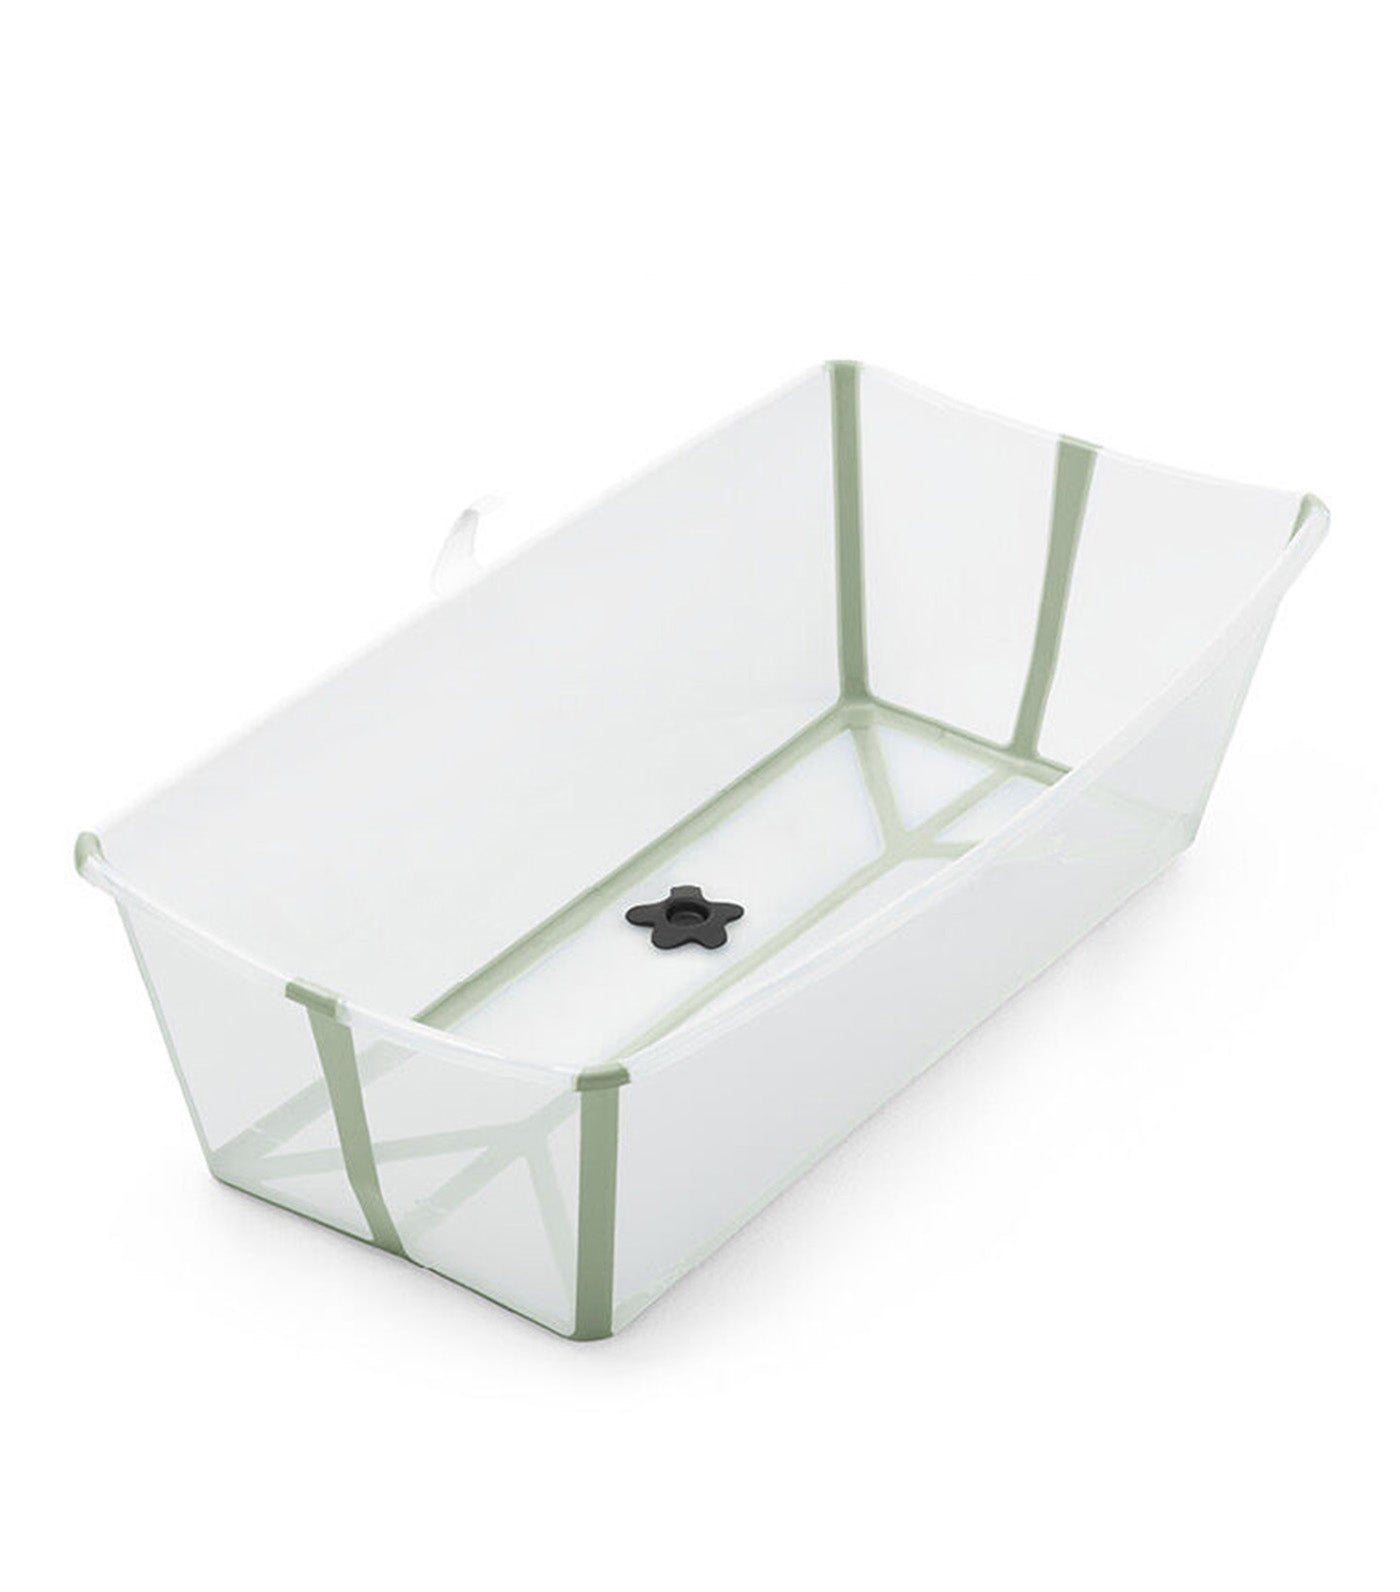 Flexi Bath® X-Large Transparent Green